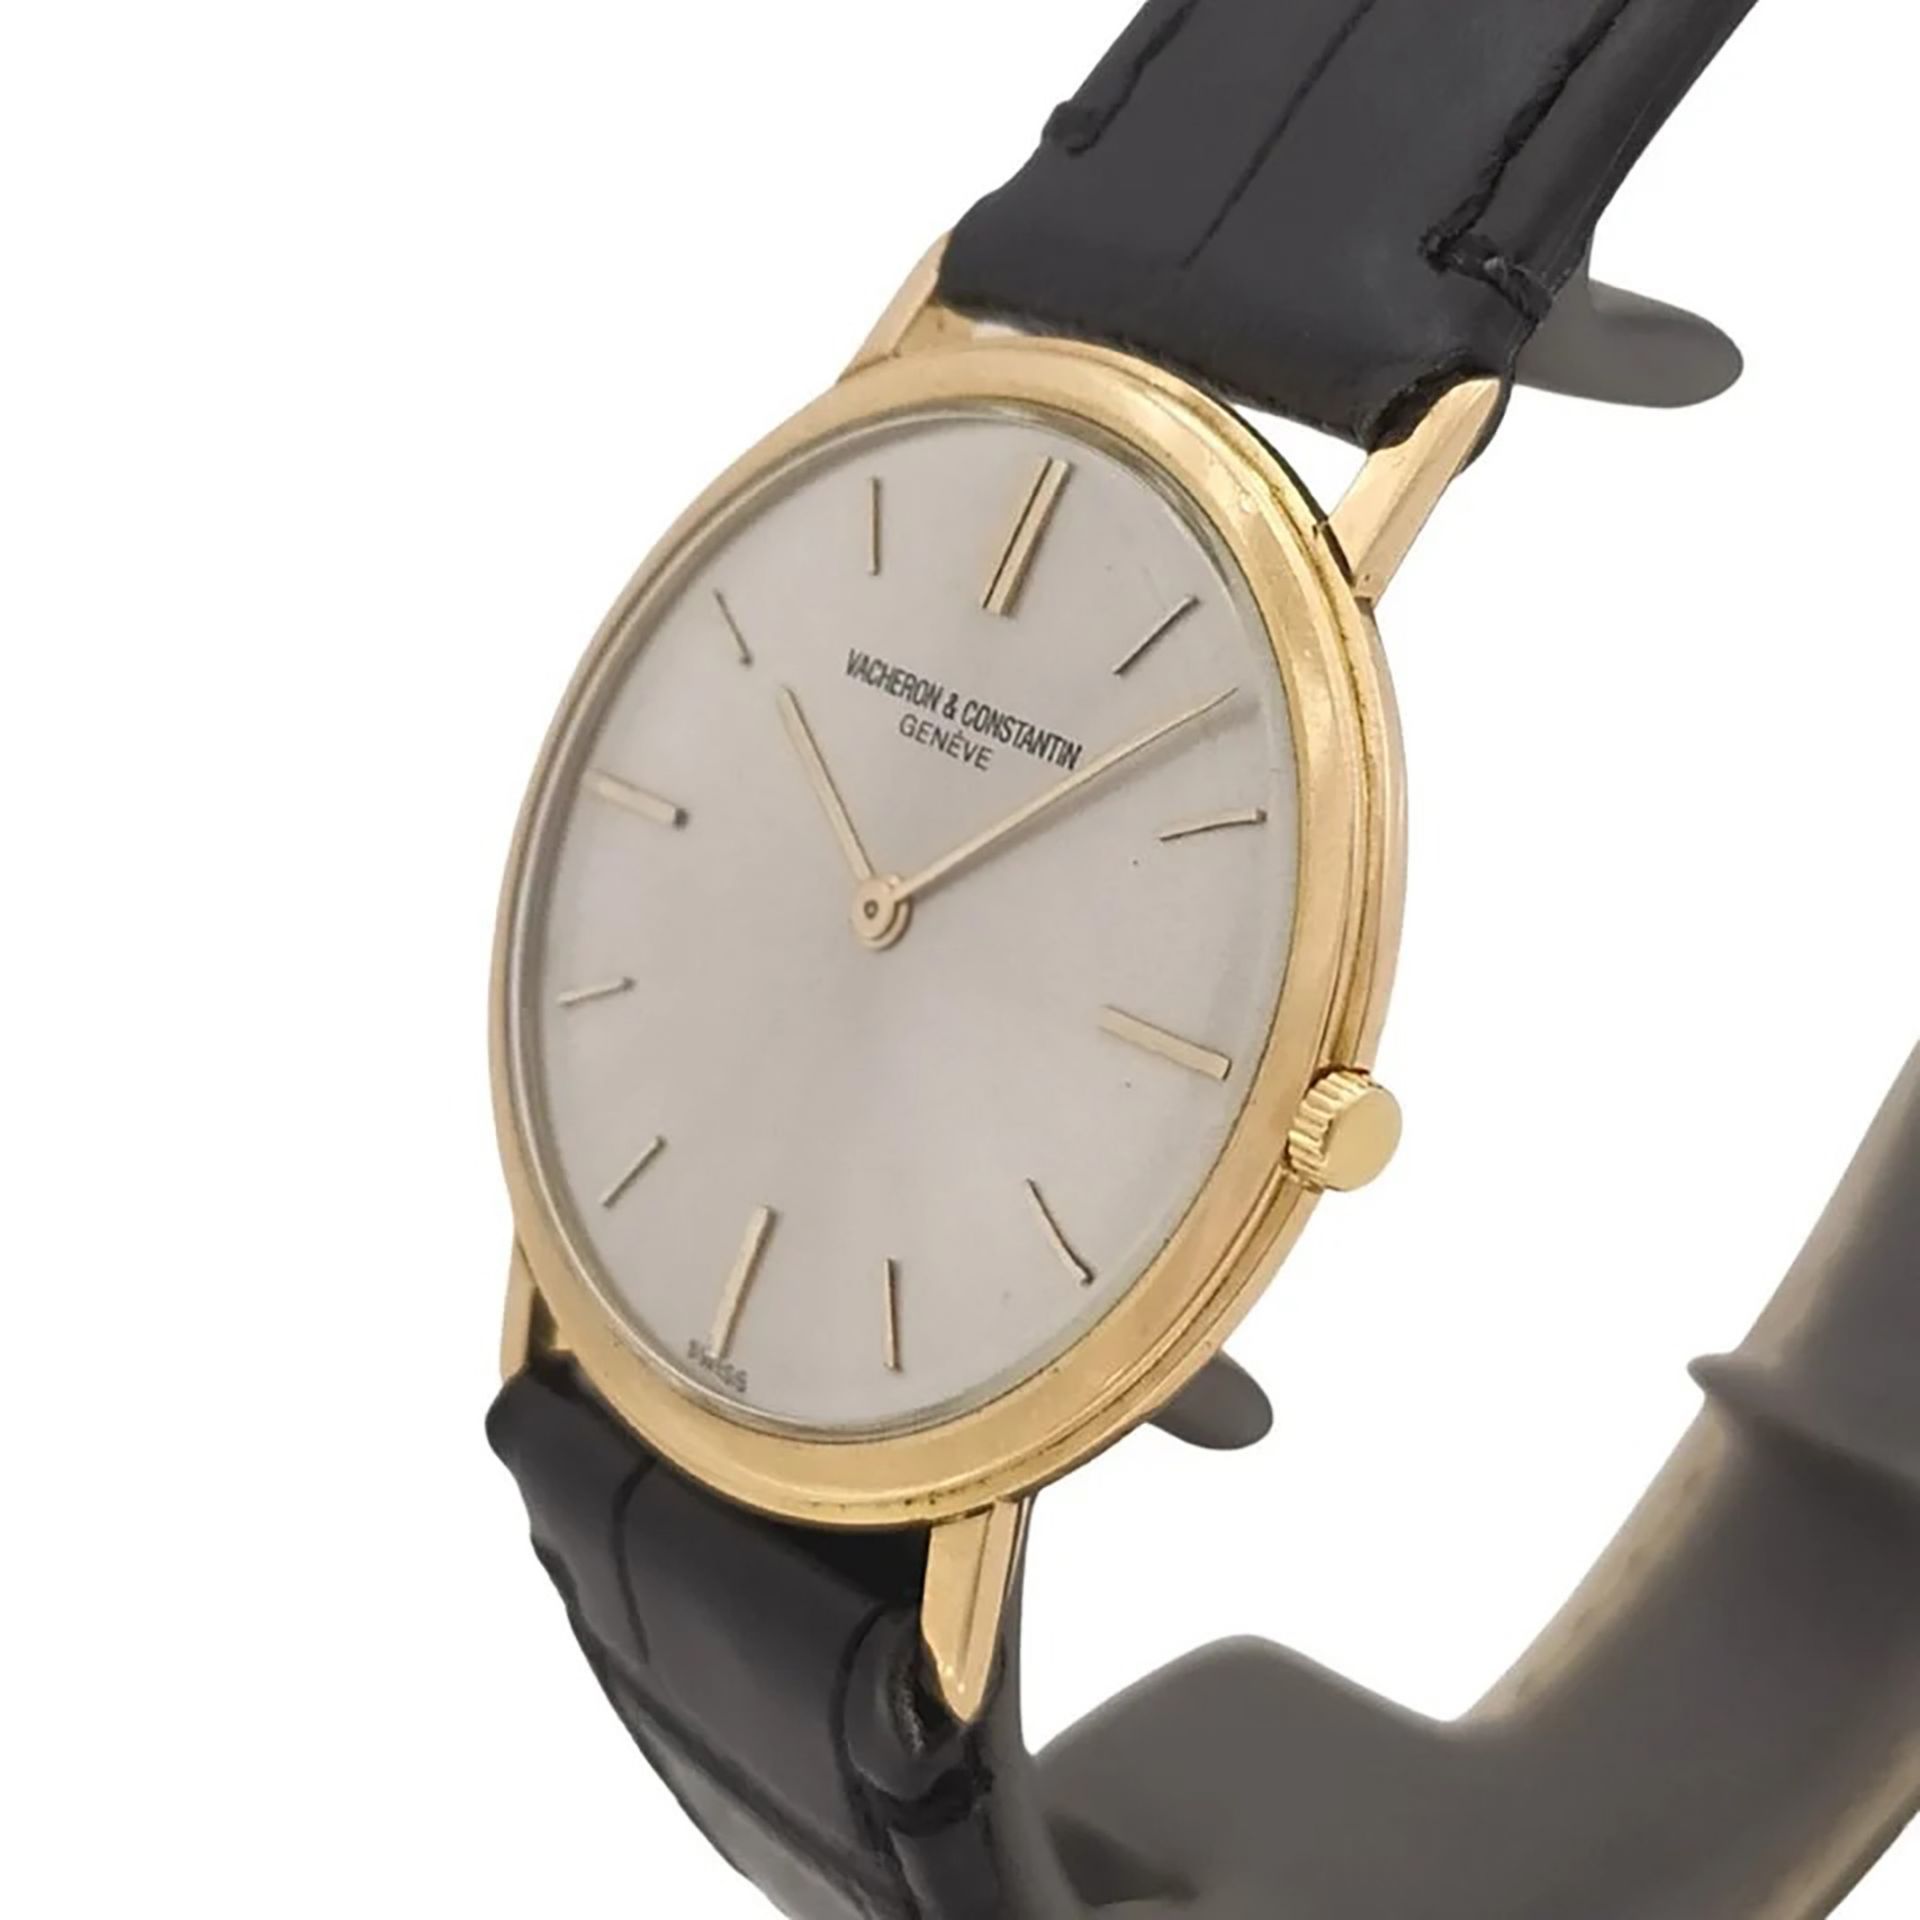 Vacheron Constantin Men's wristwatch in 18k yellow gold Vintage model year 1960 - Image 3 of 7